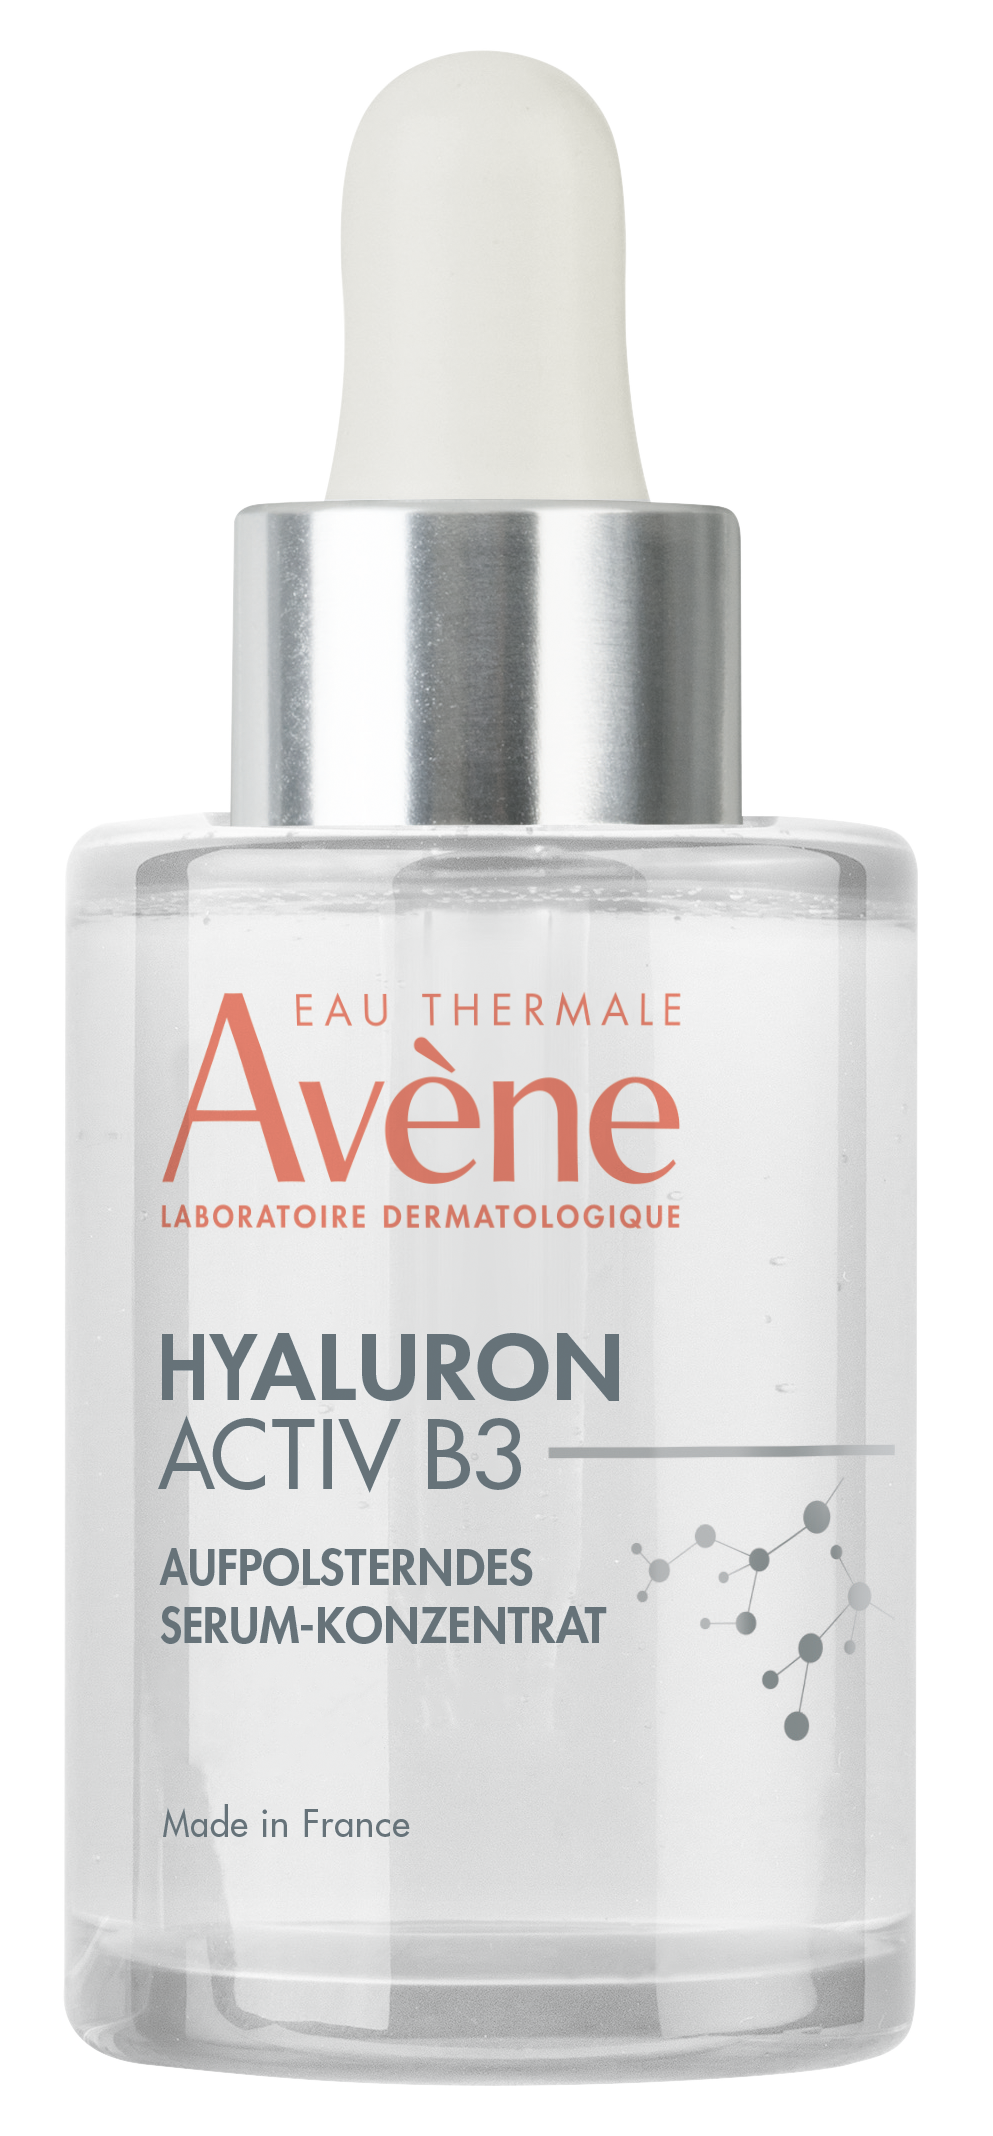 Eau Thermale Avène - HYALURON ACTIV B3 Aufpolsterndes Serum-Konzentrat